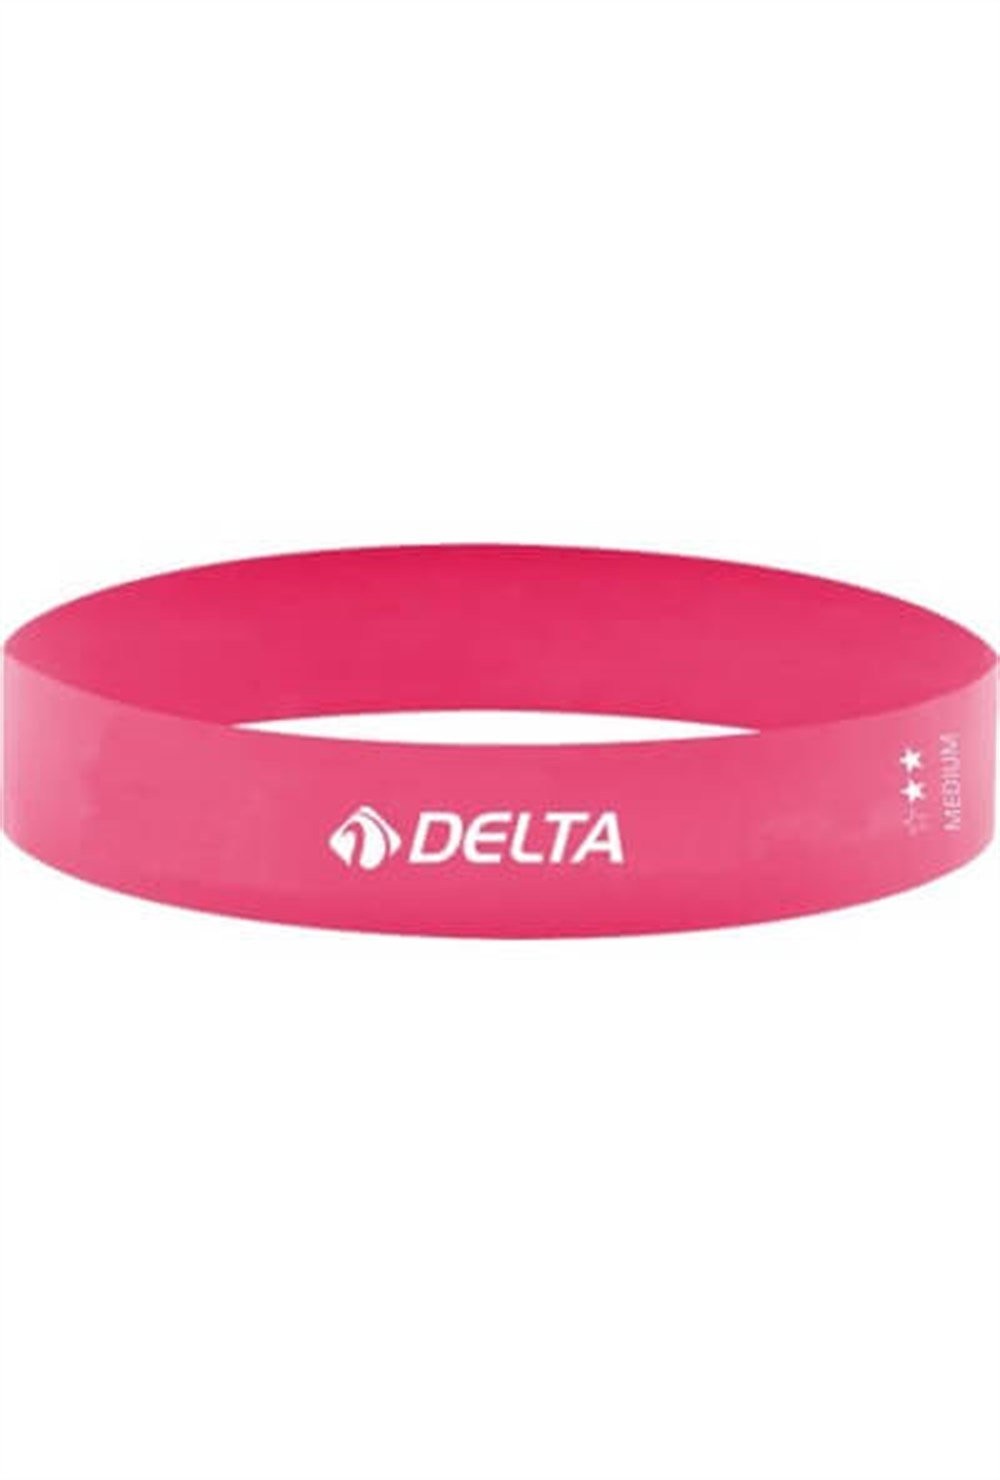 Delta Pilates Bandı Orta Sert